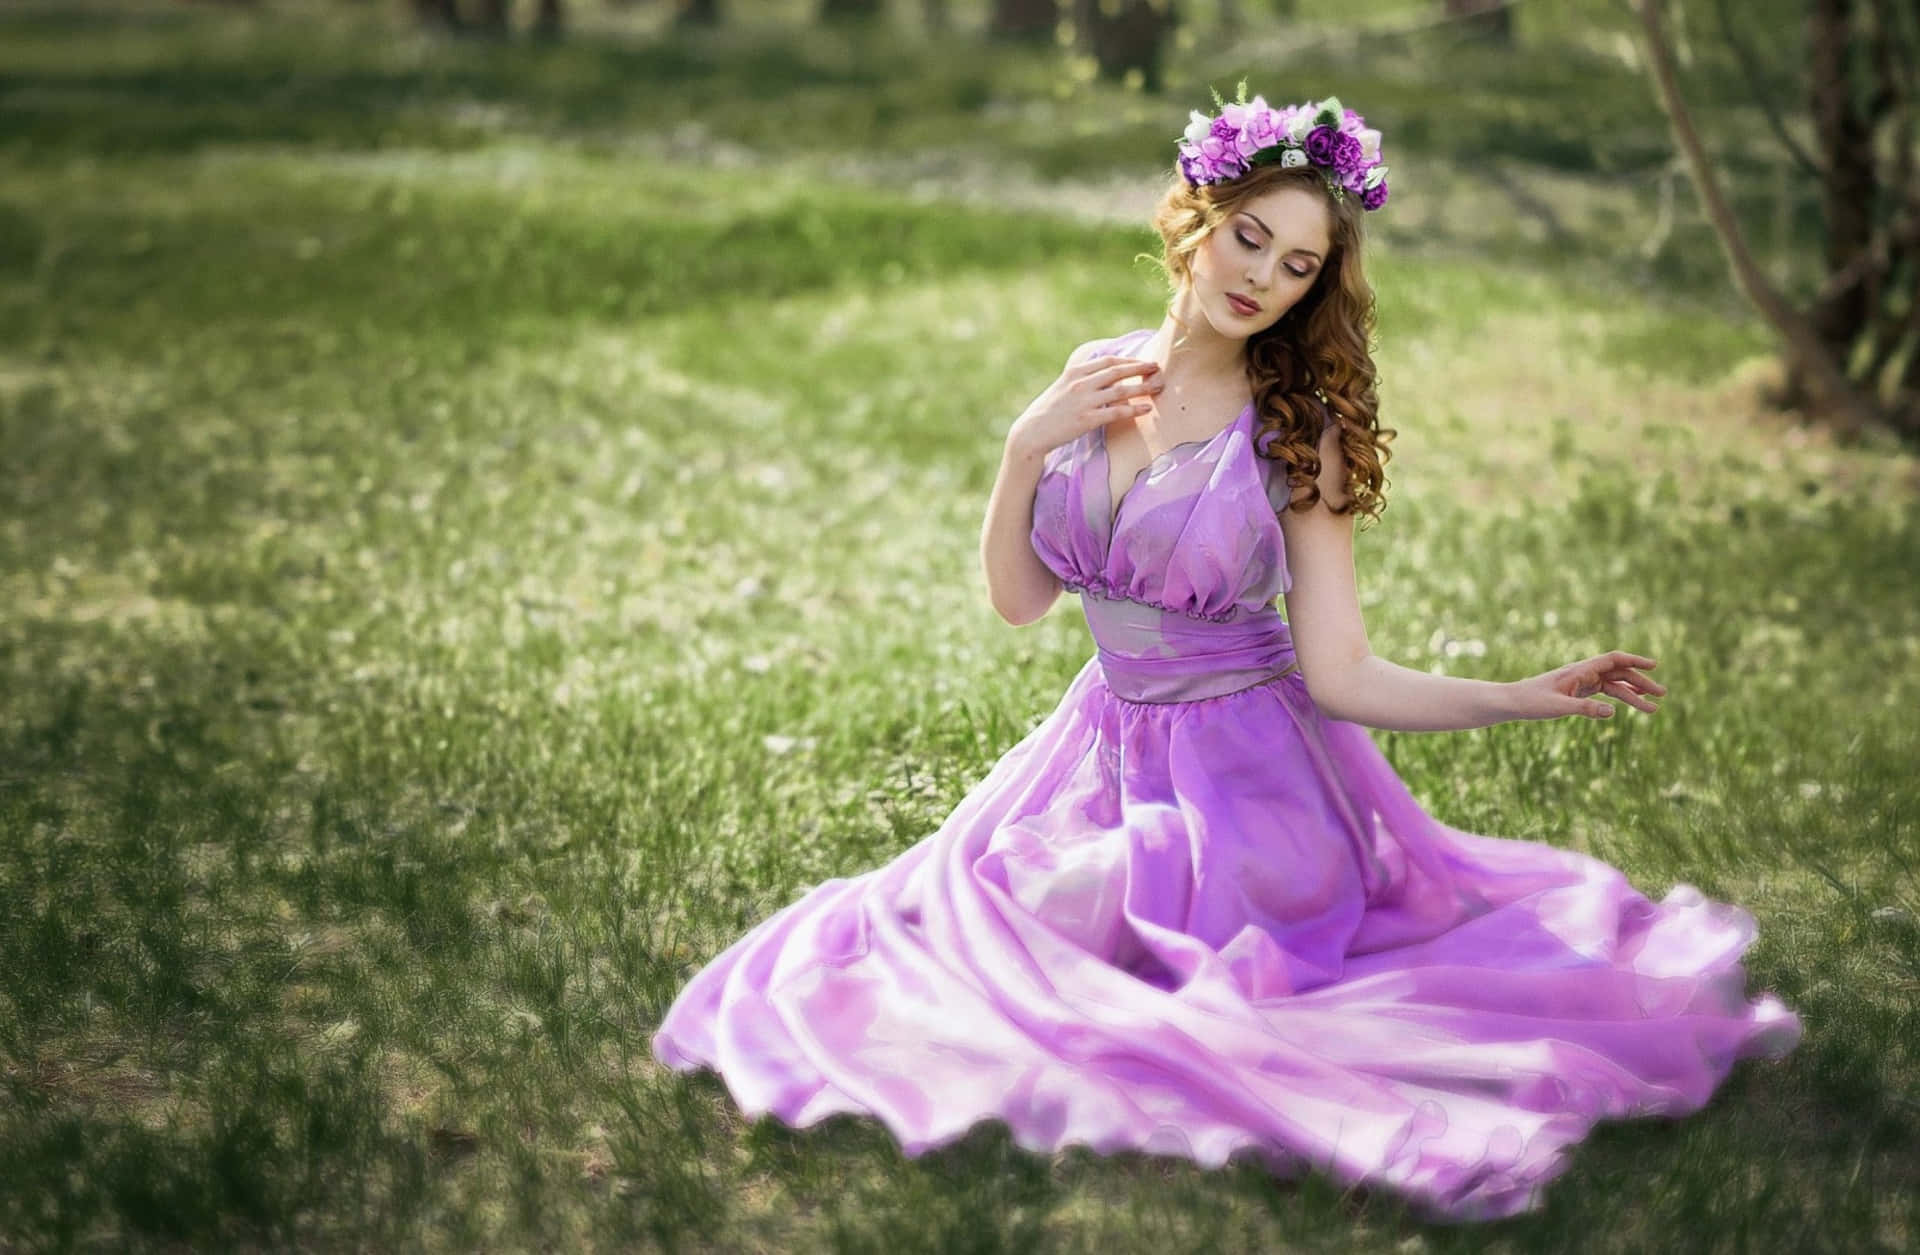 Stun in this regal purple dress! Wallpaper